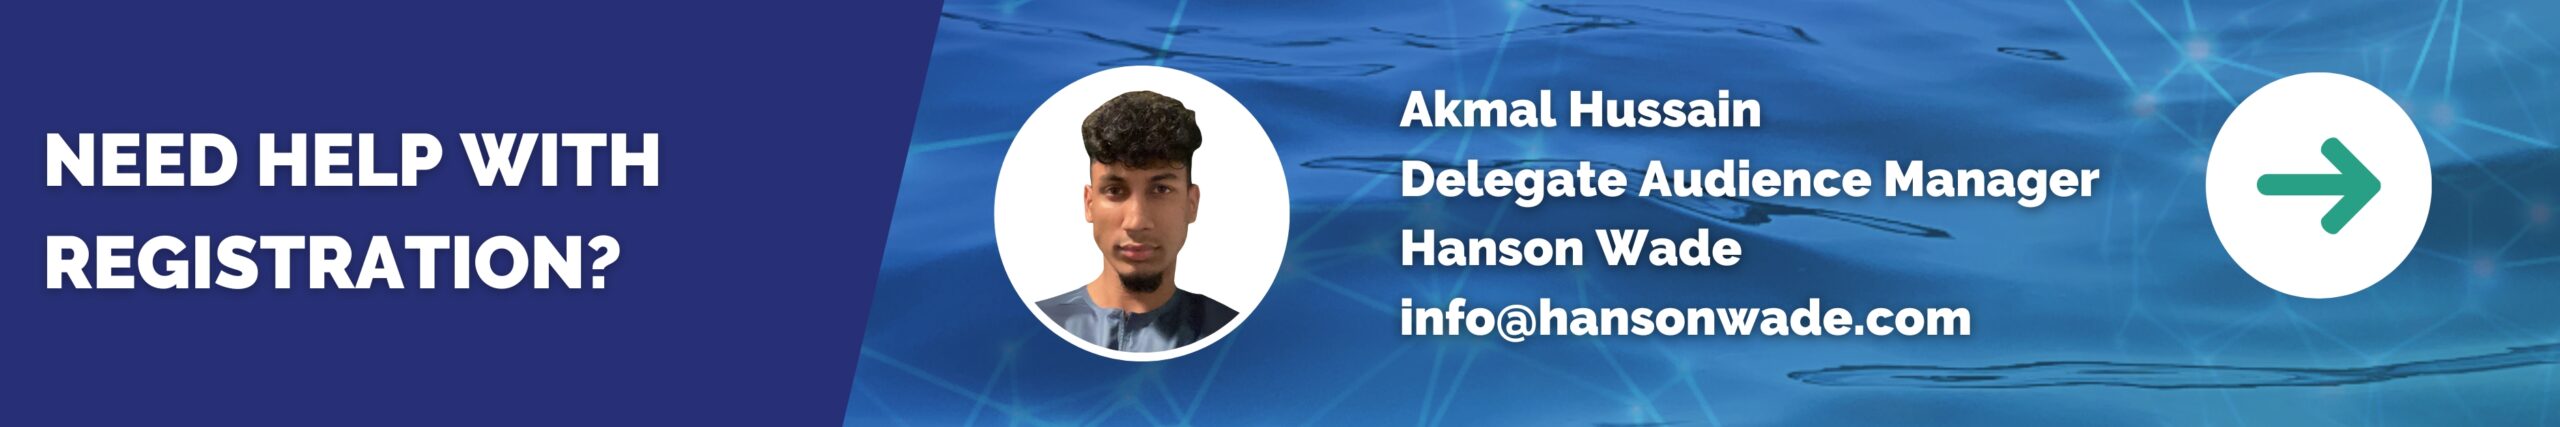 Akmal Hussain - Registration Assistance